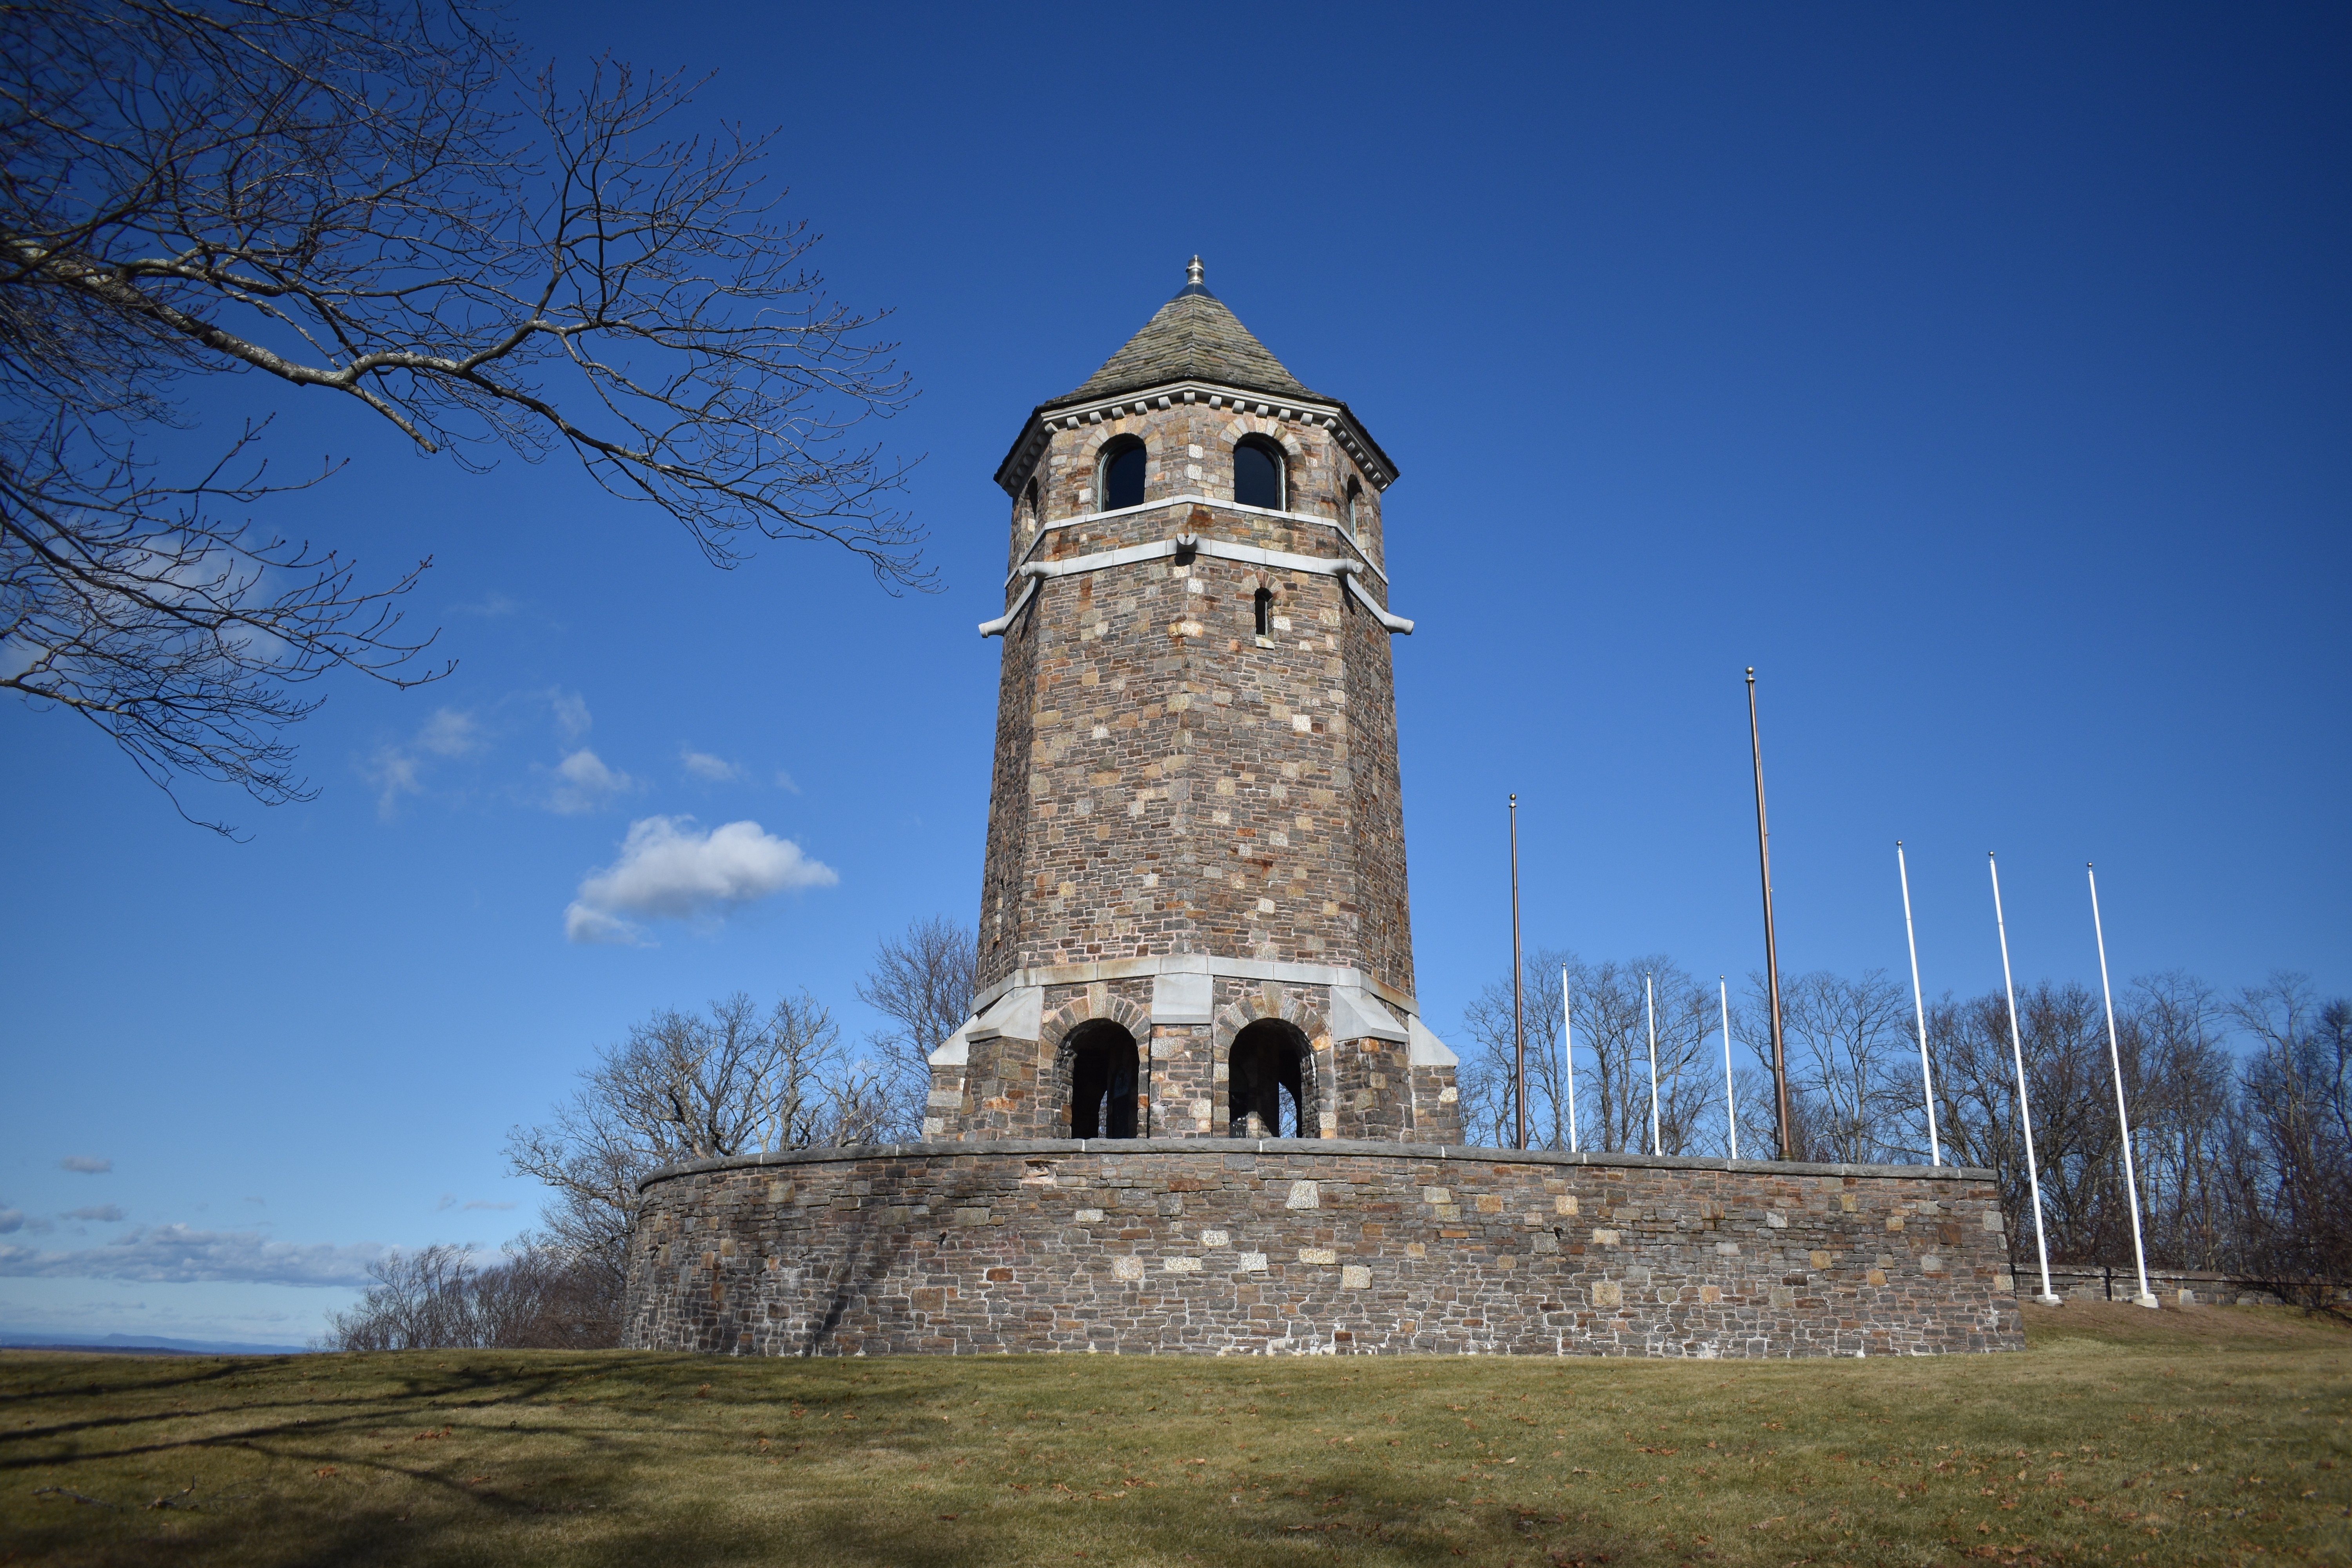 Fox Hill Tower in Vernon-Rockville, CT